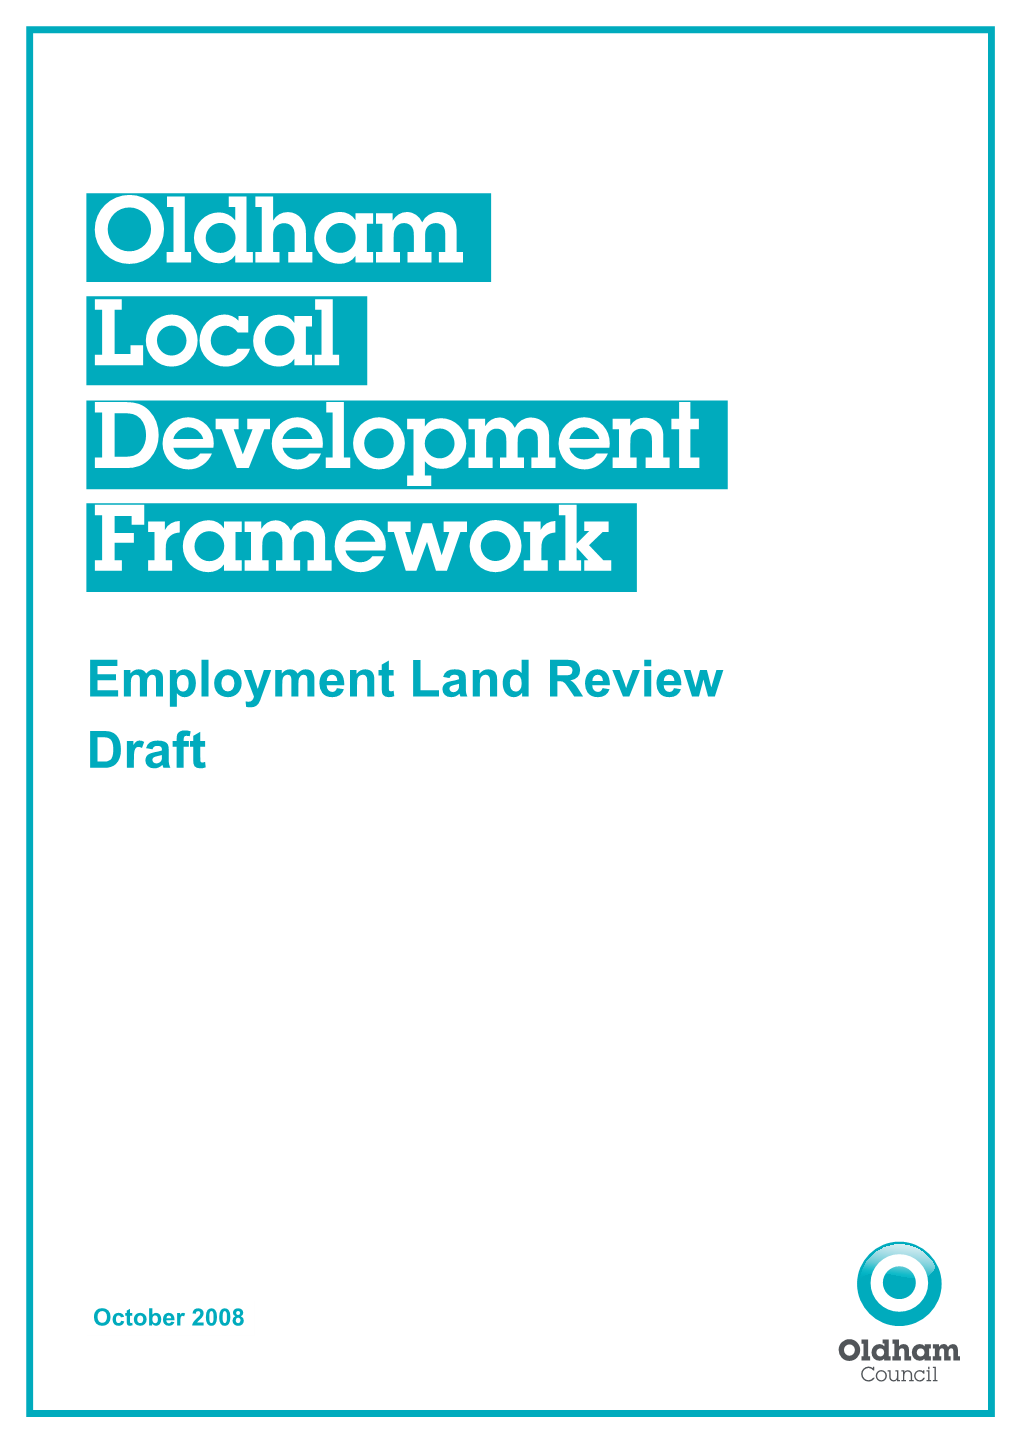 Oldham Local Development Framework